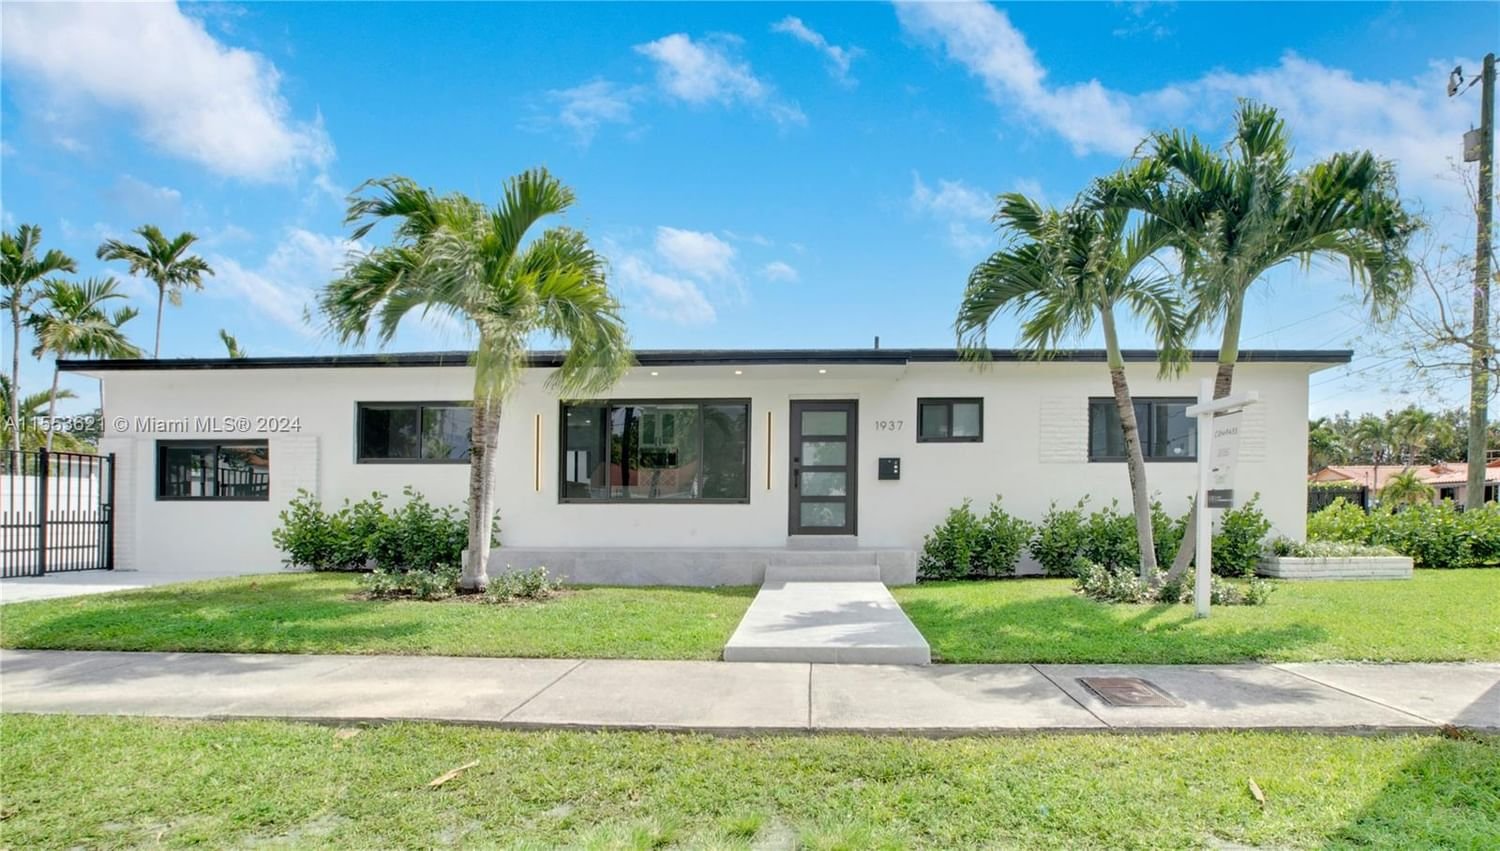 Real estate property located at 1937 16 Ave, Miami-Dade County, OSCEOLA GROVES, Miami, FL